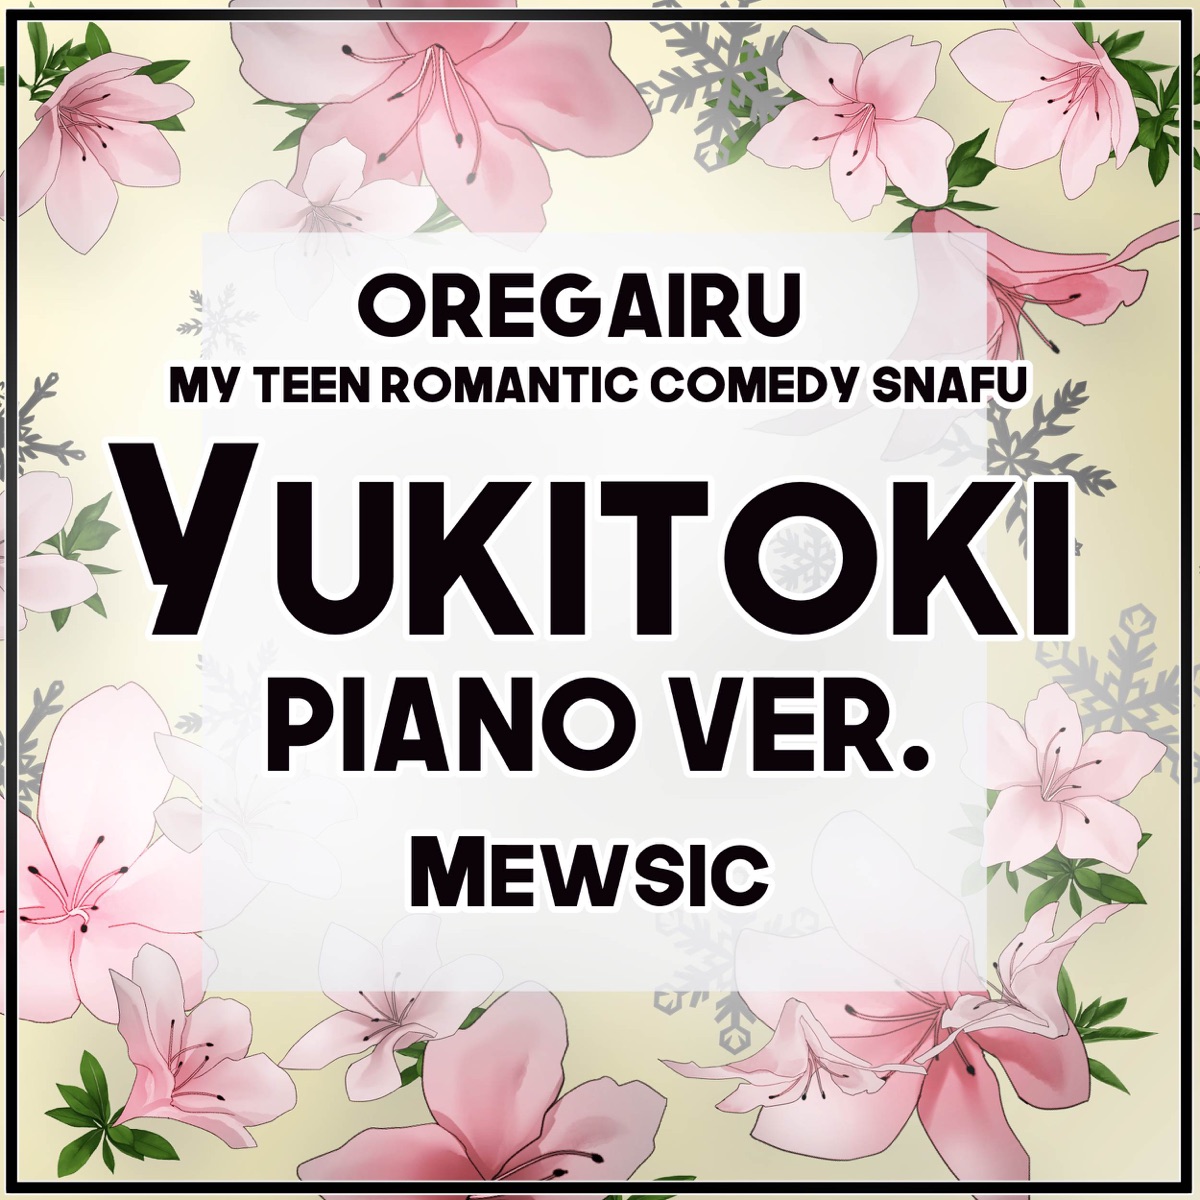 Shitsuren Song - Takusan Kiite, Naite Bakari No Watashi Wa Mou (From  Summertime Render) [feat. Velo S] [English] - Single - Album by Mewsic -  Apple Music